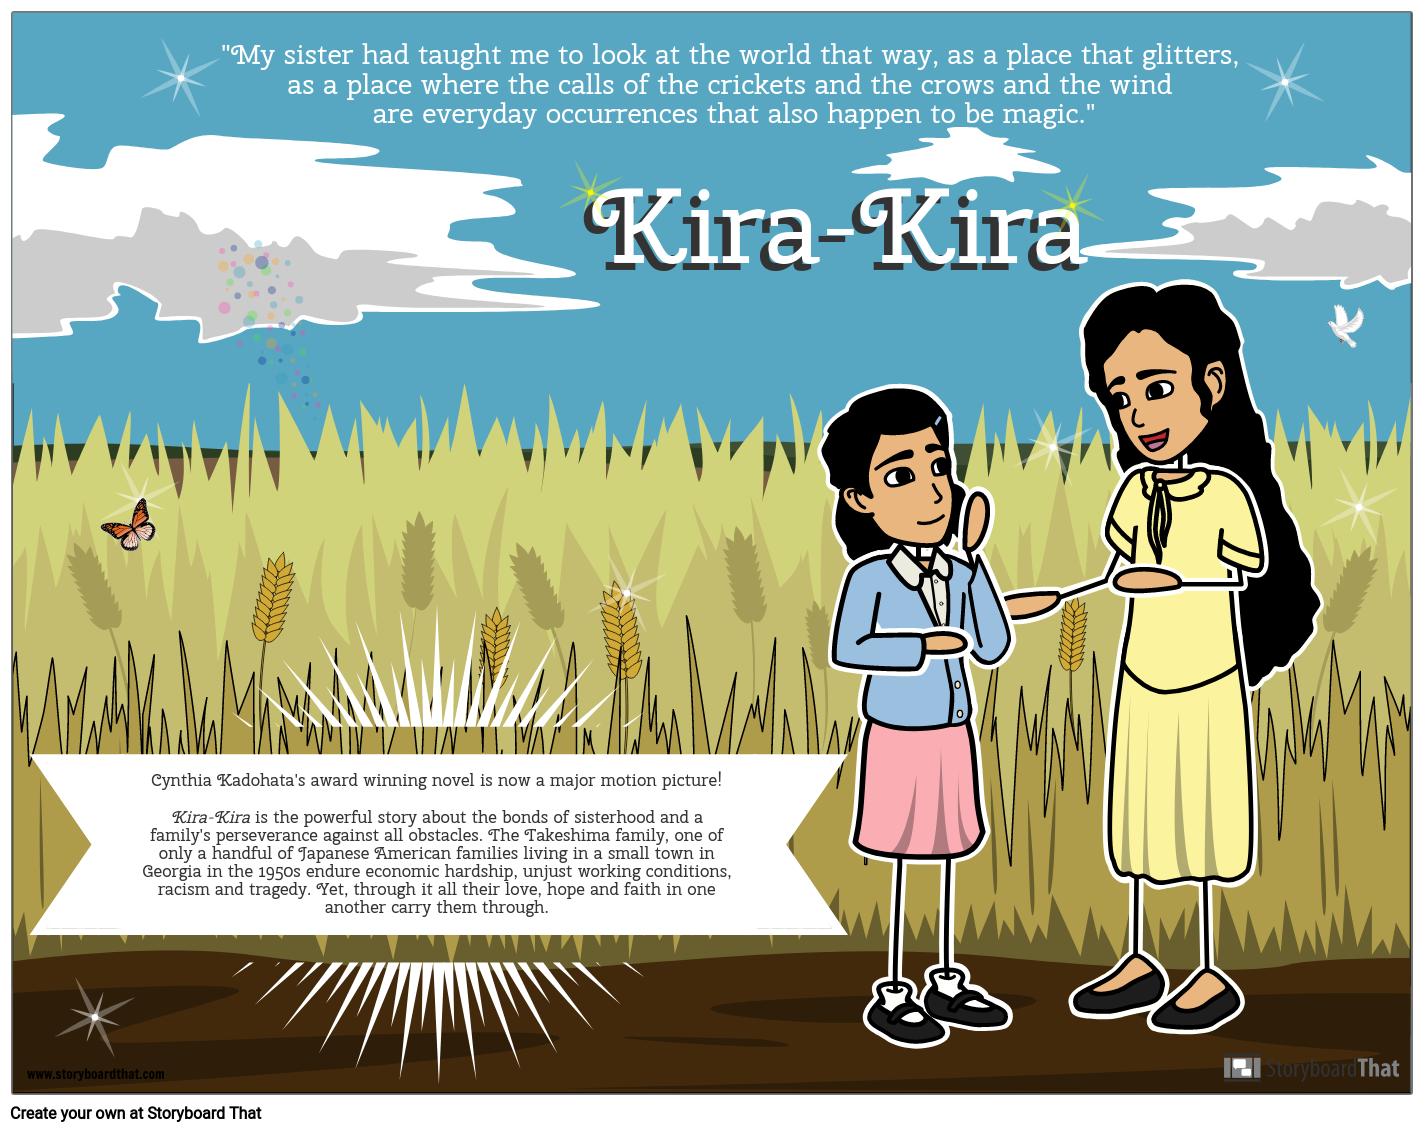 Movie Poster of Kira-Kira Storyboard